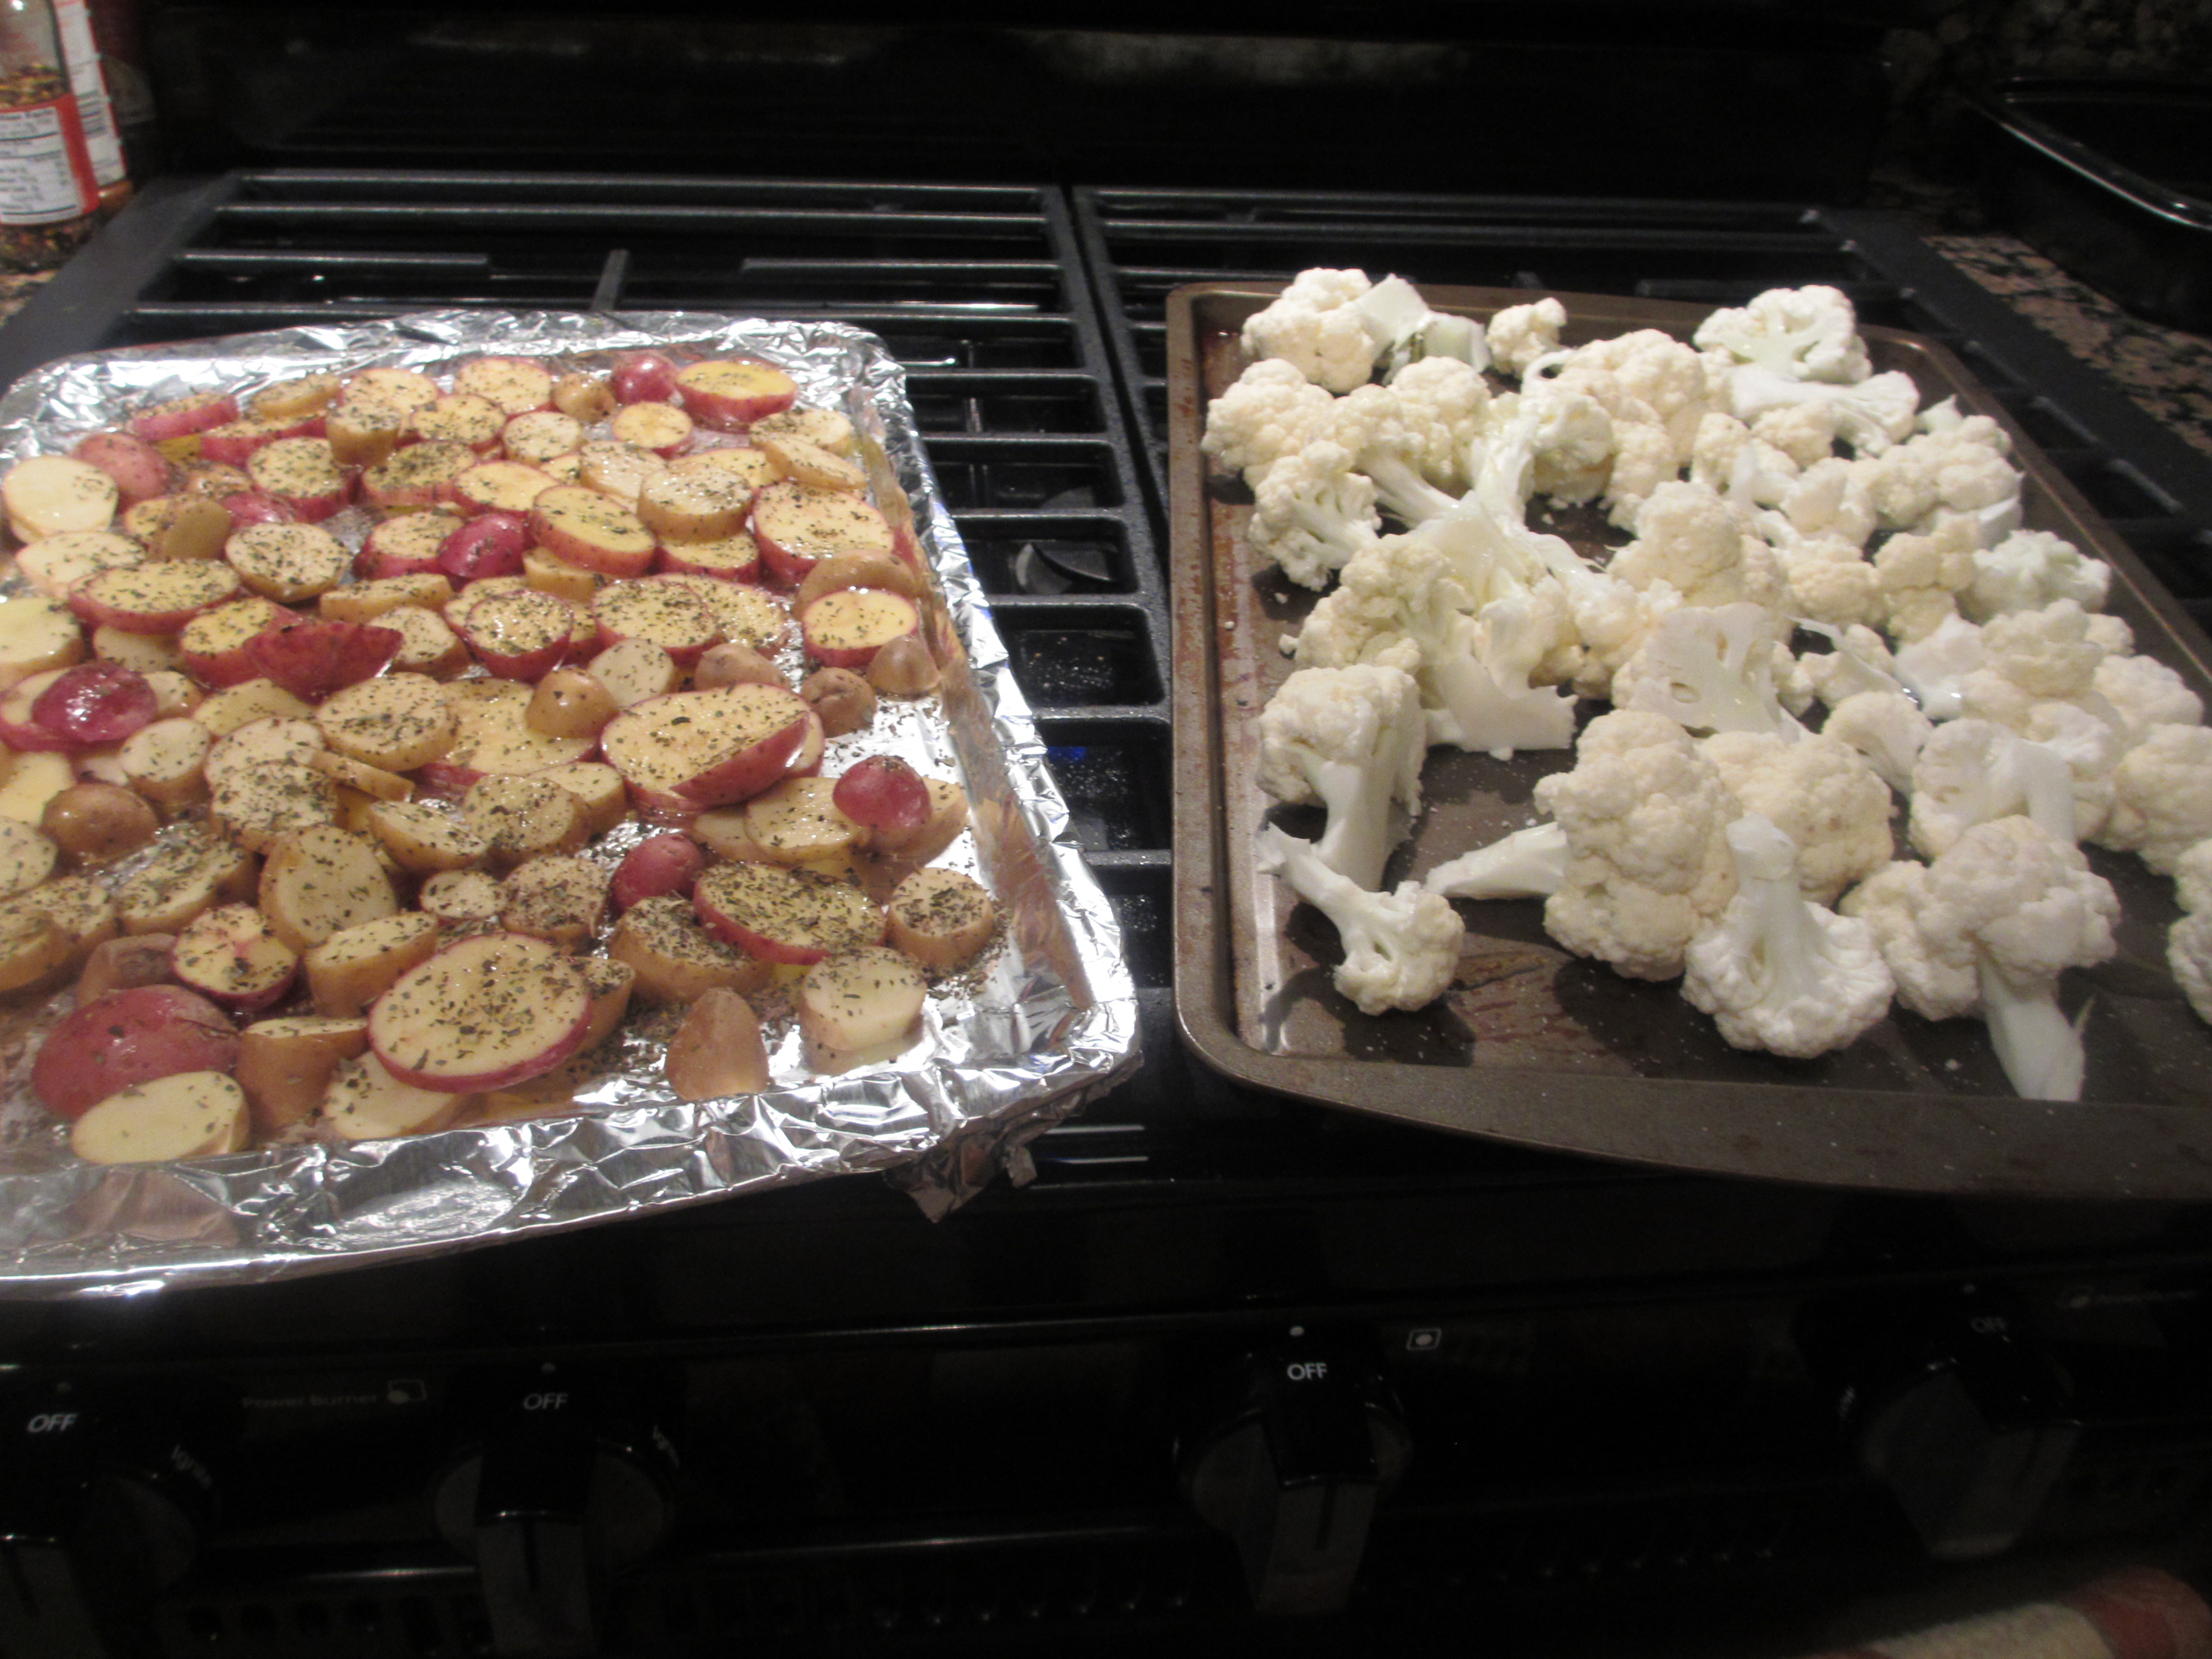 Roasted potatoes and cauliflower